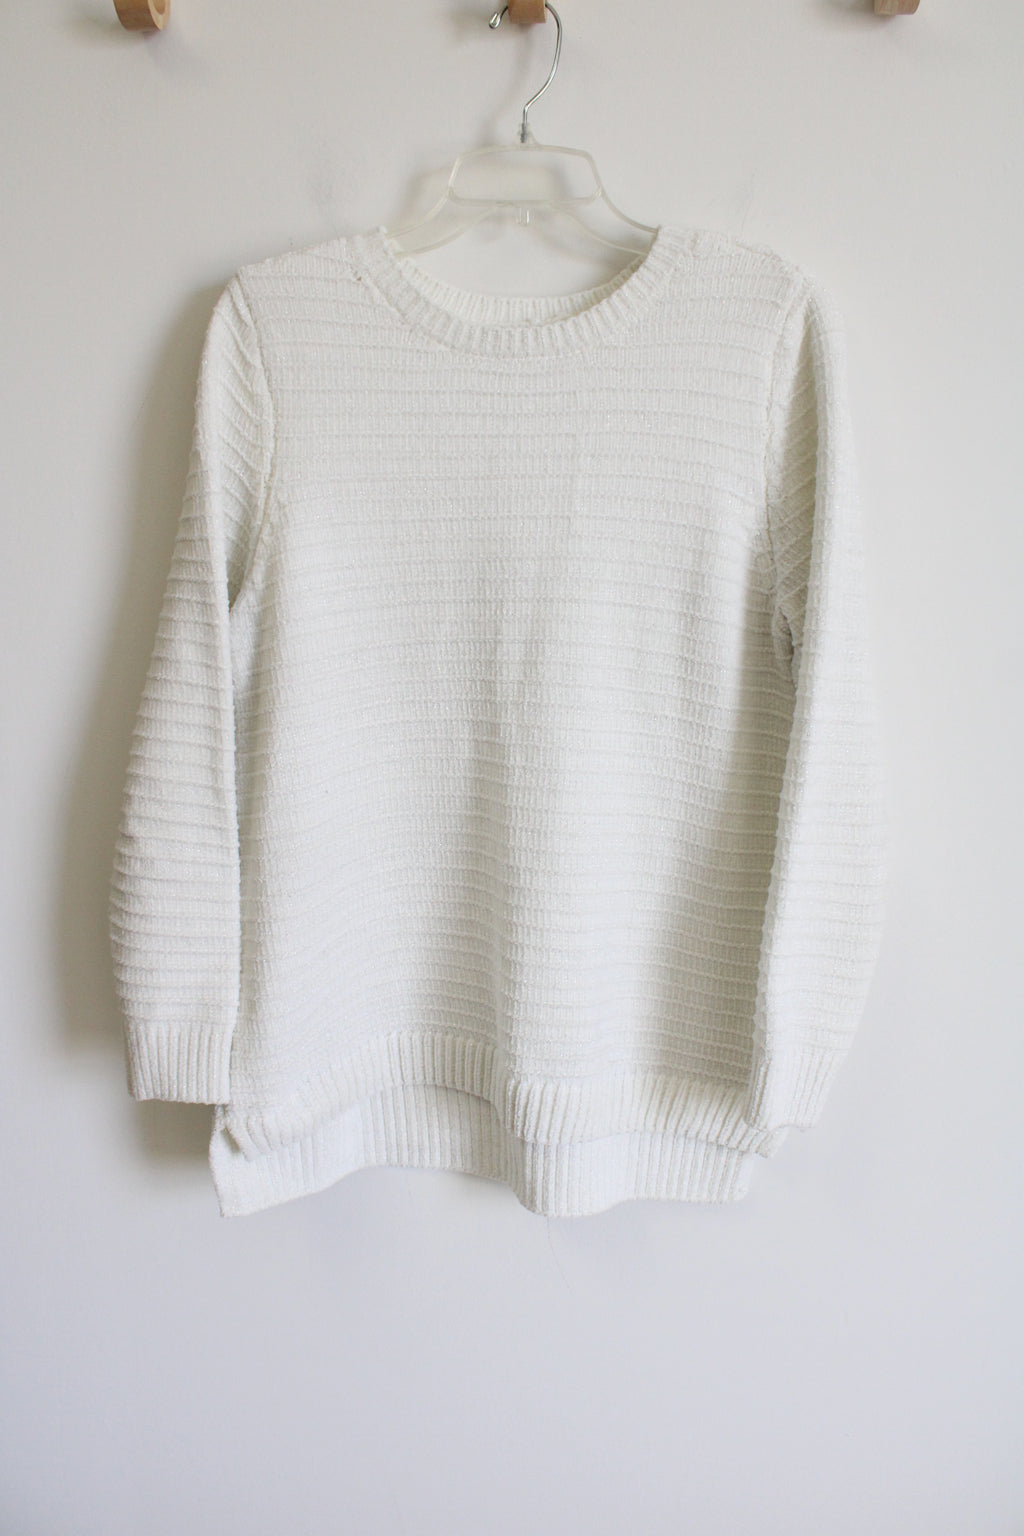 Christopher & Banks White Shimmer Knit Sweater | M